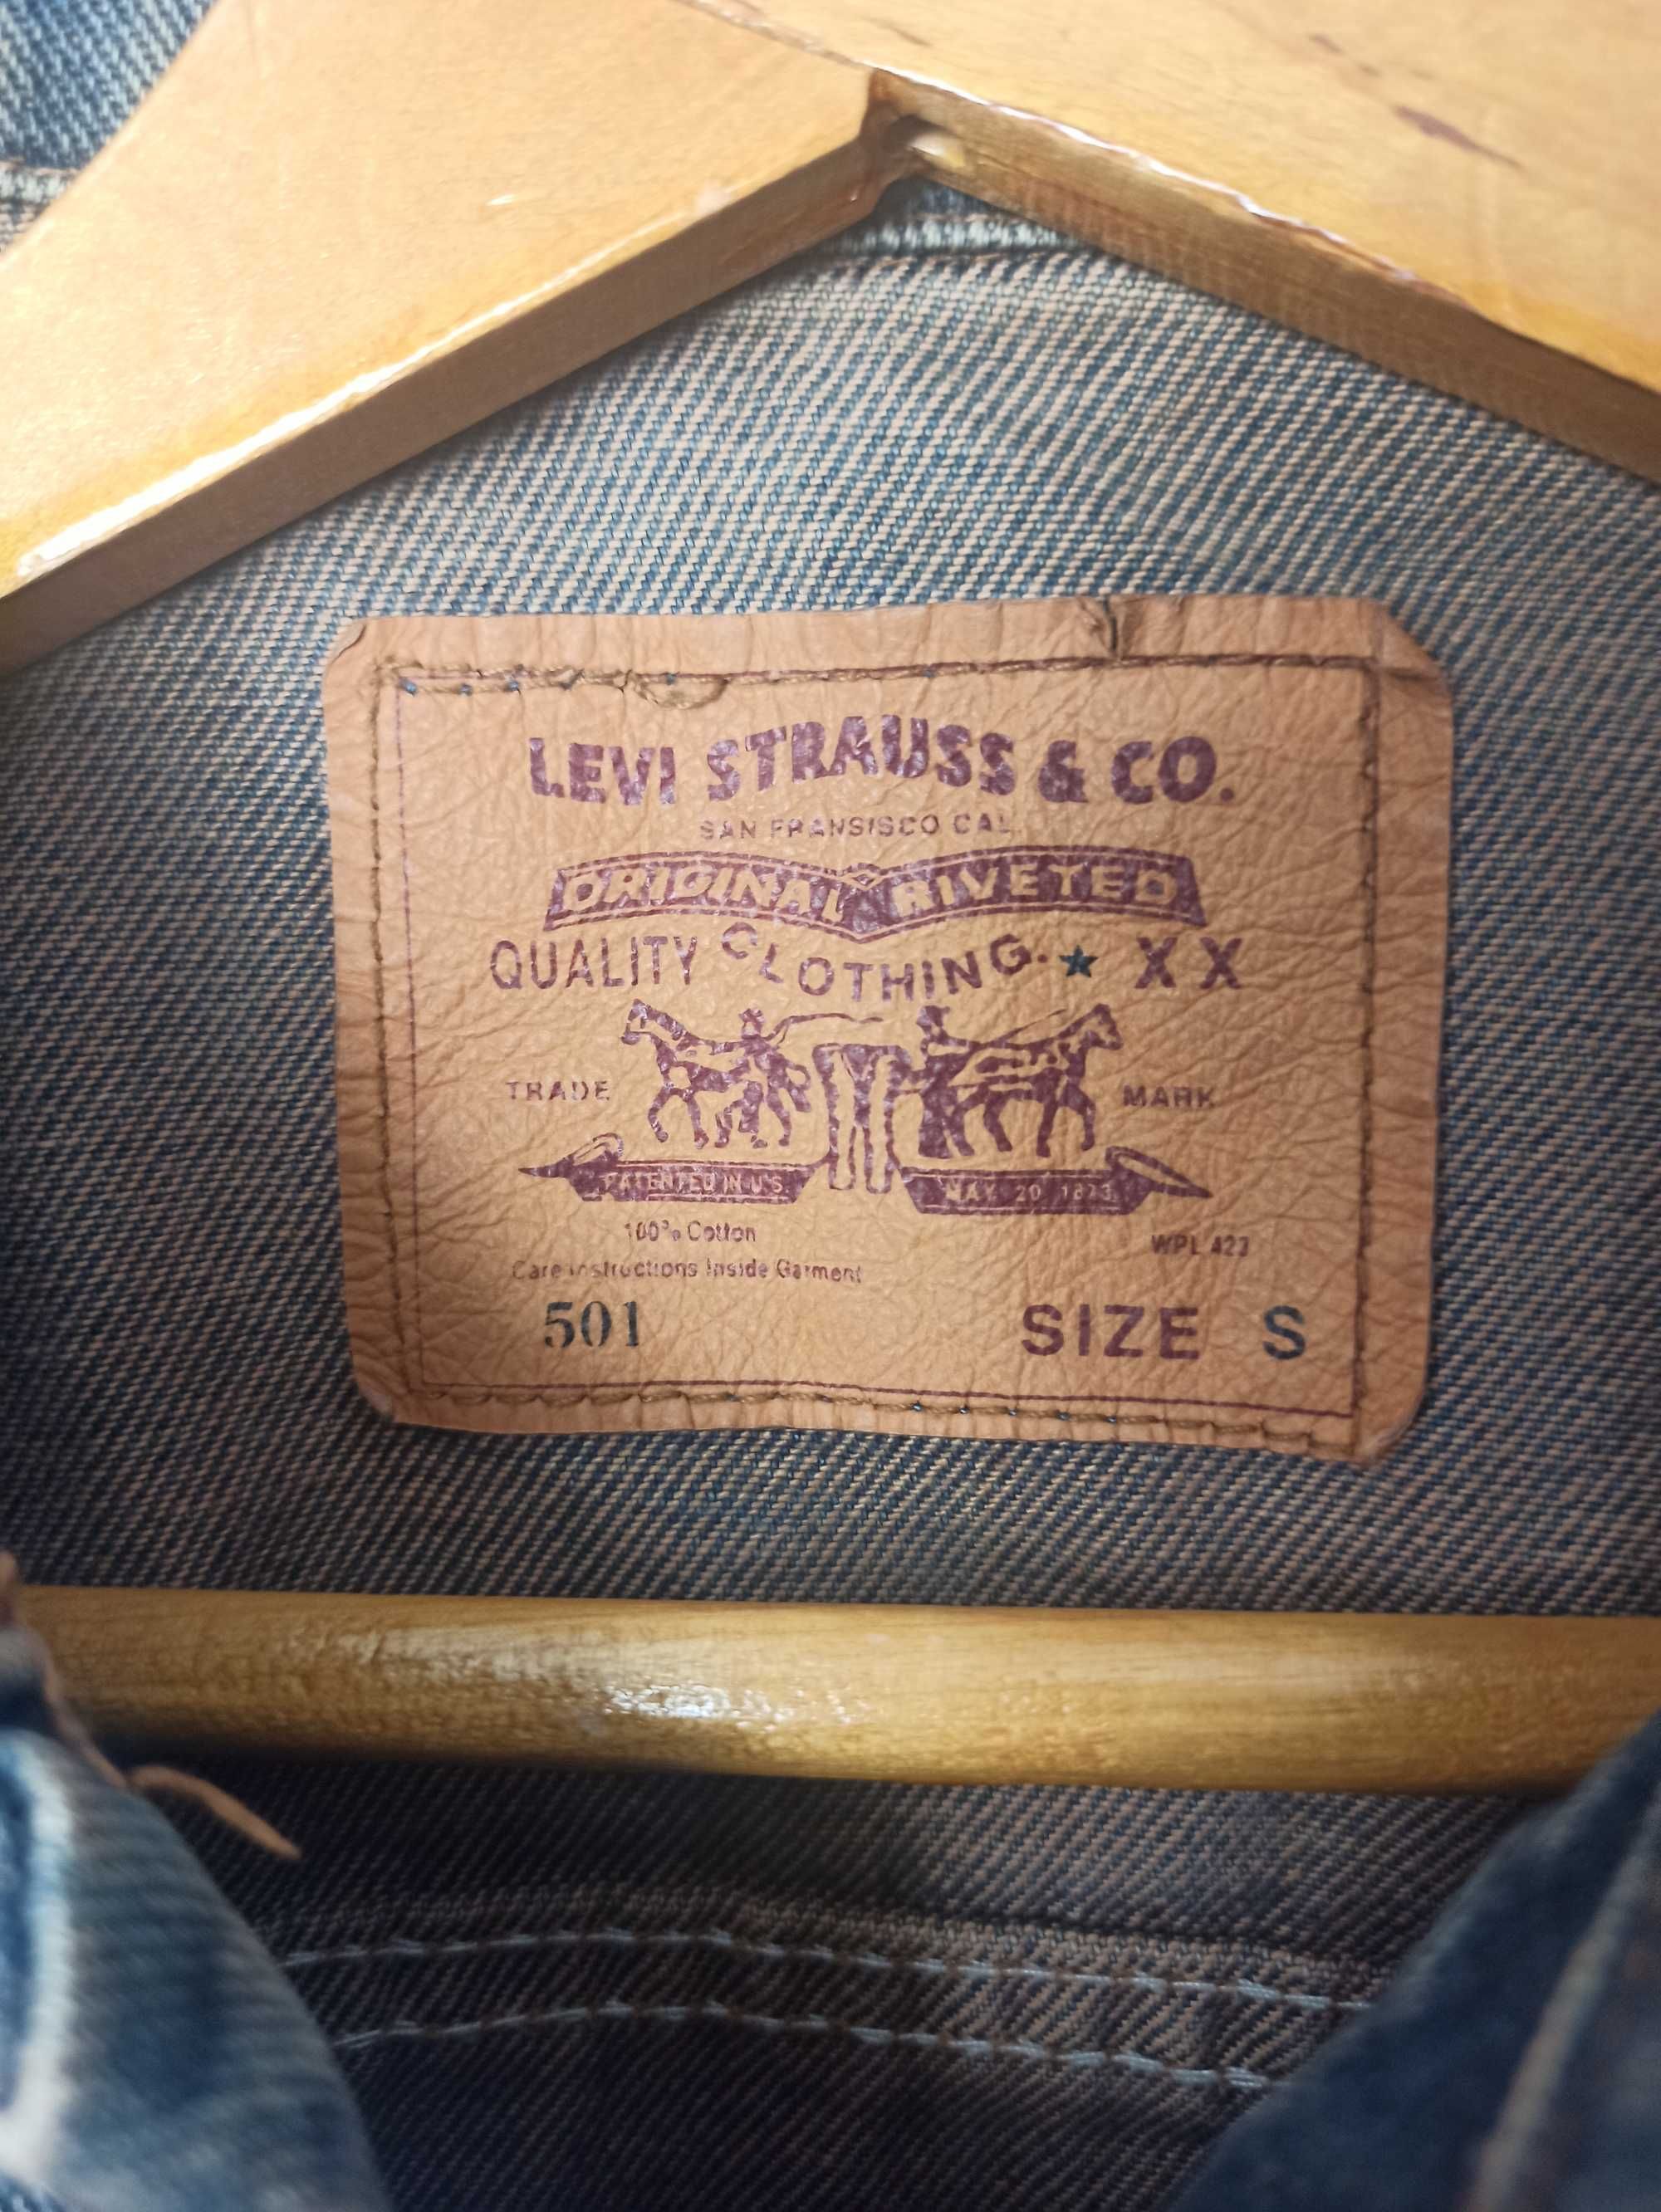 Vintage Levi's Denim Jacket Kurtka Jeansowa